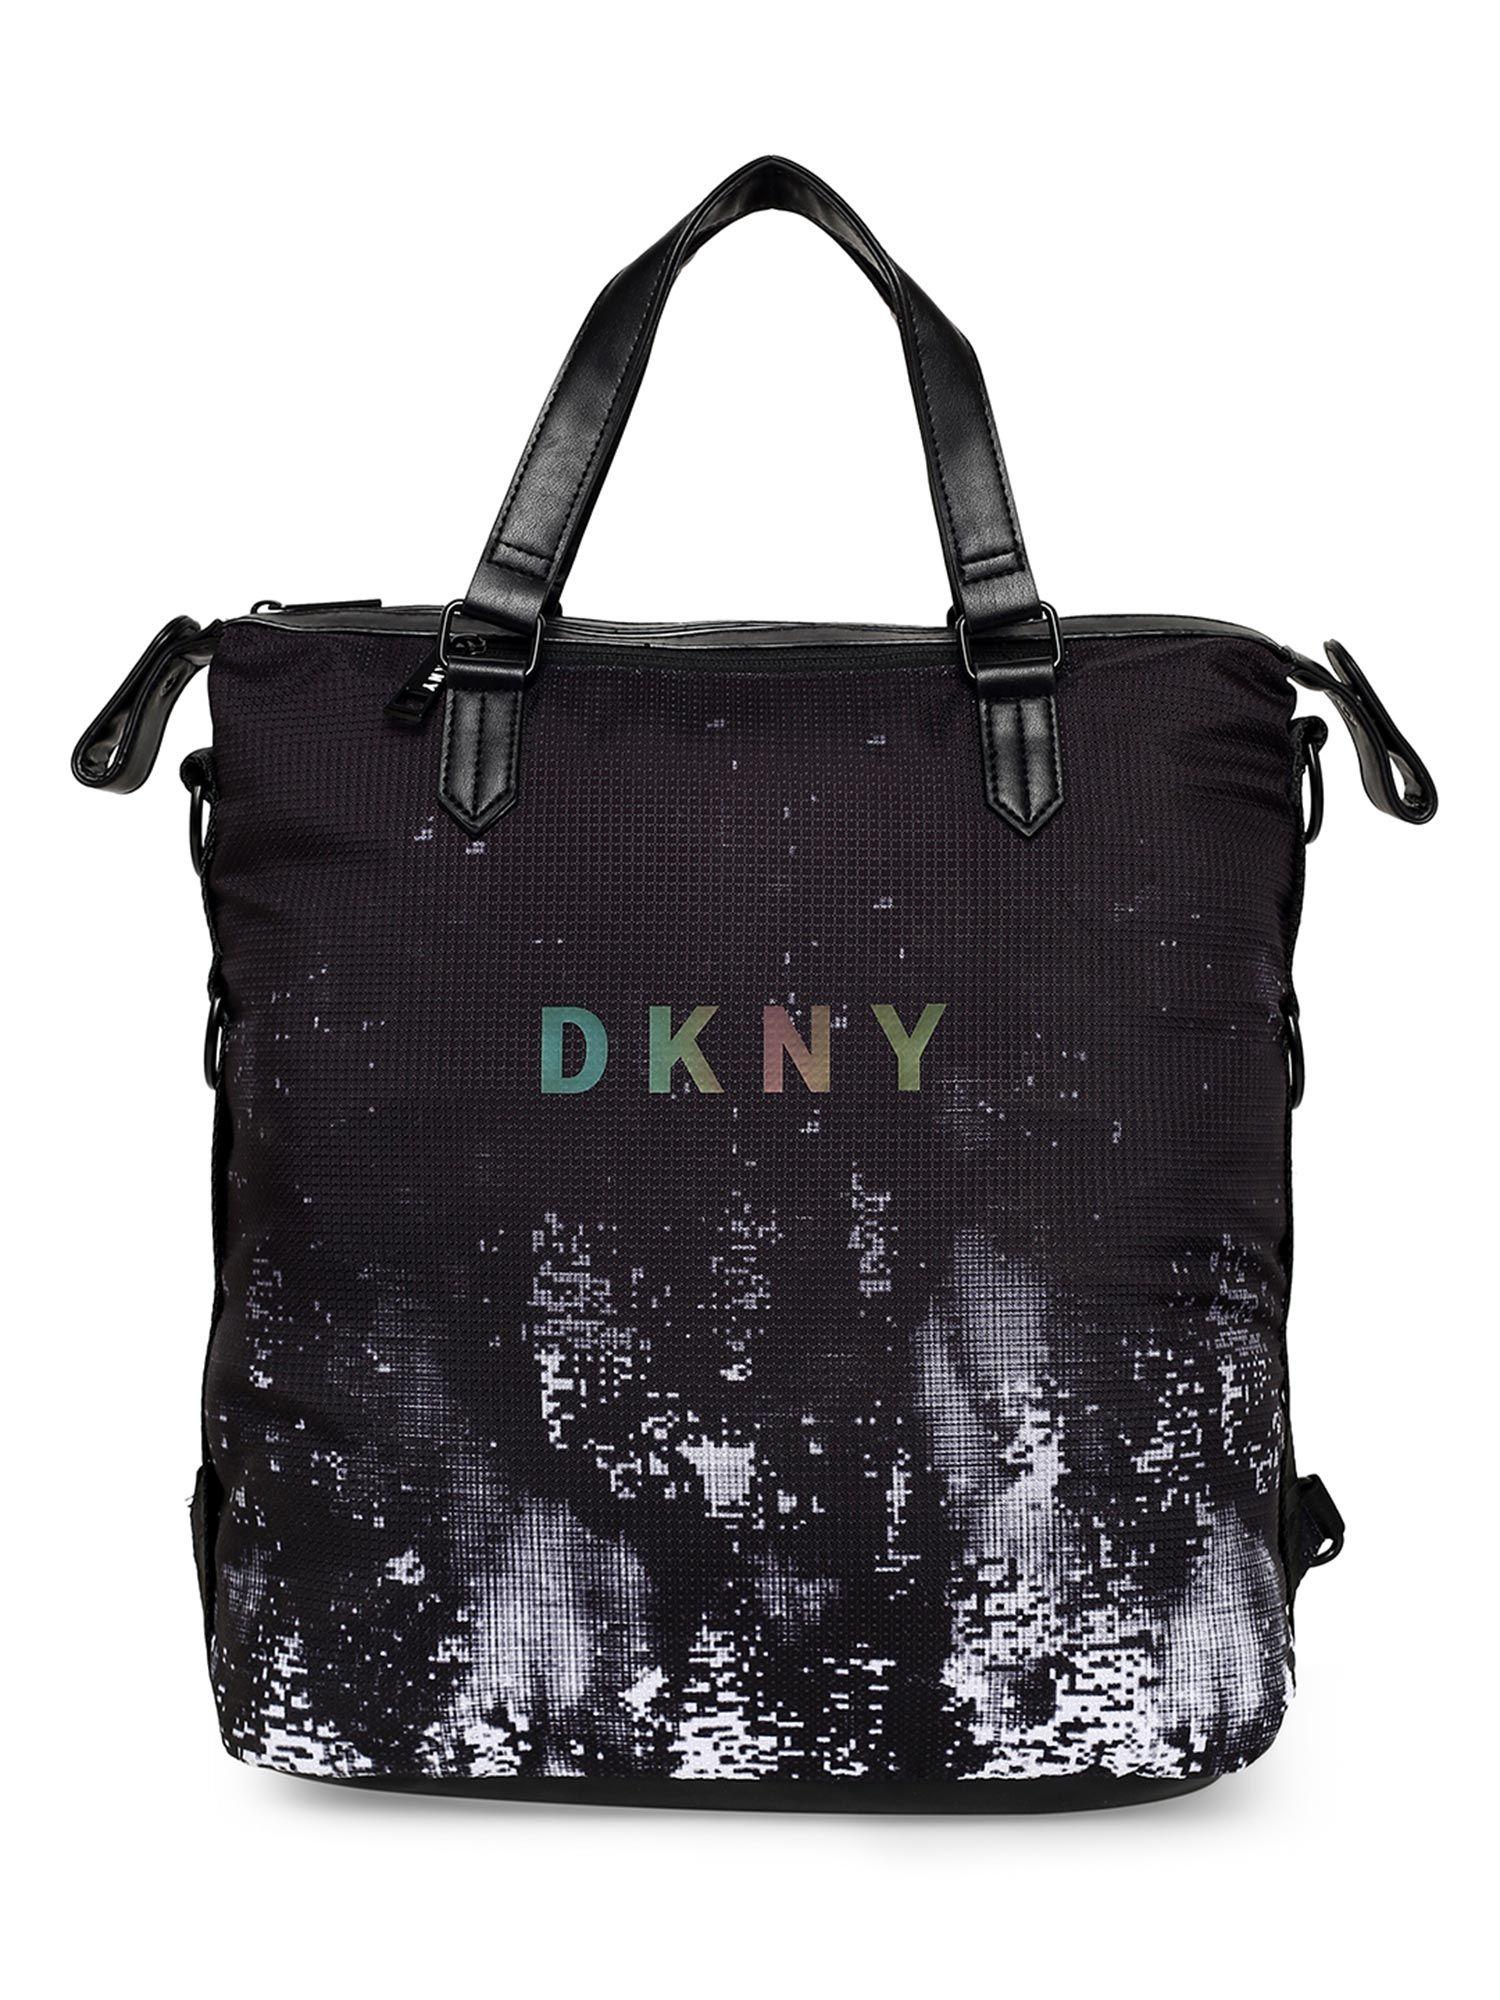 glimmer black color polyester material soft medium size boarding bag